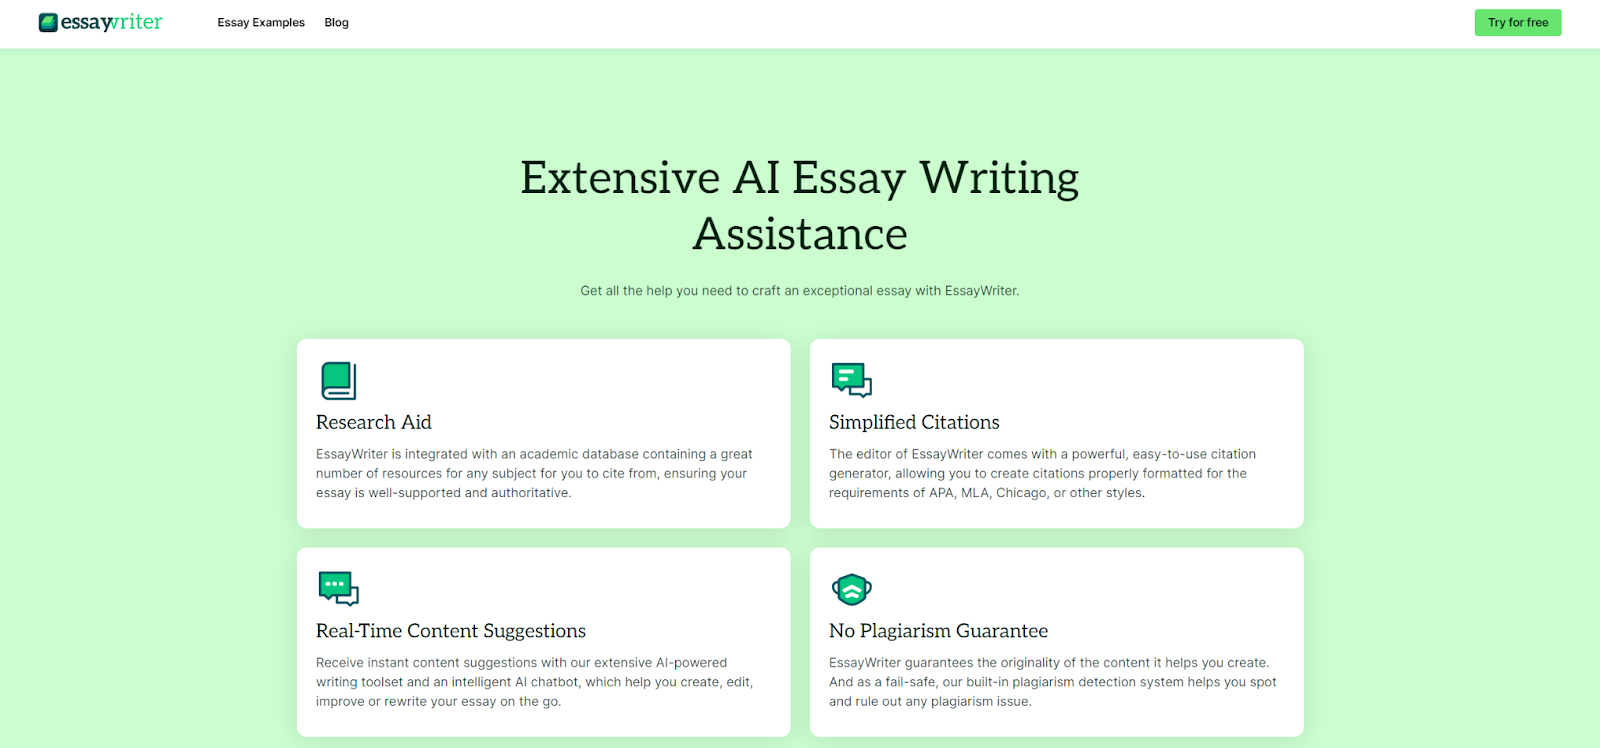 Benefits of Using Essay Writer